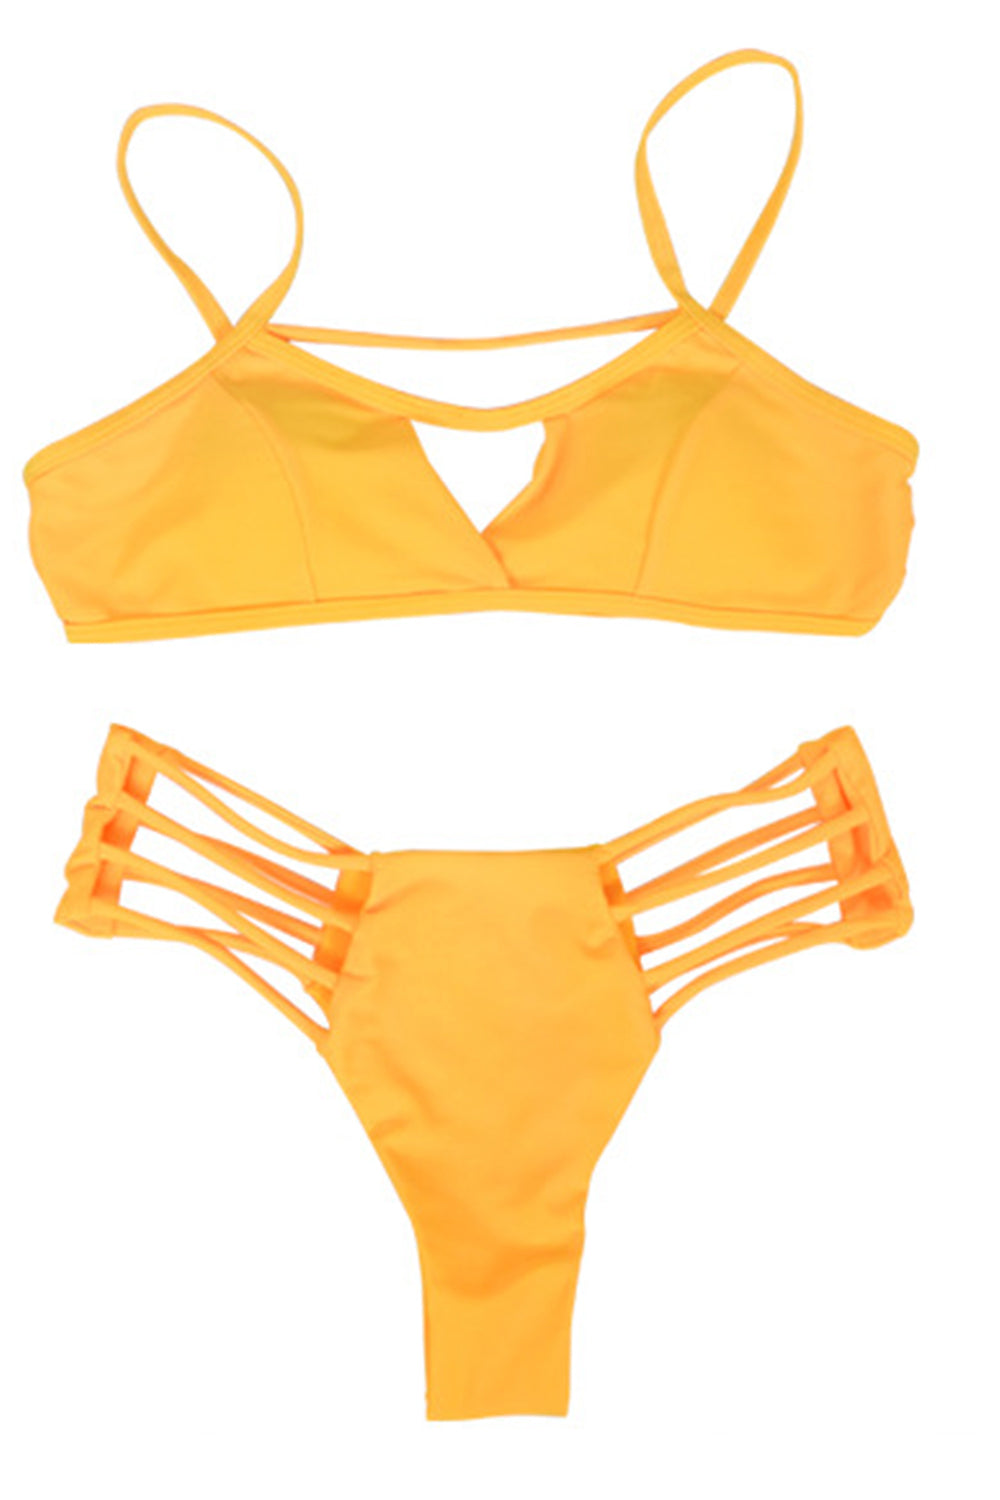 Iyasson Sexy High-waisted Strappy Bikini Sets